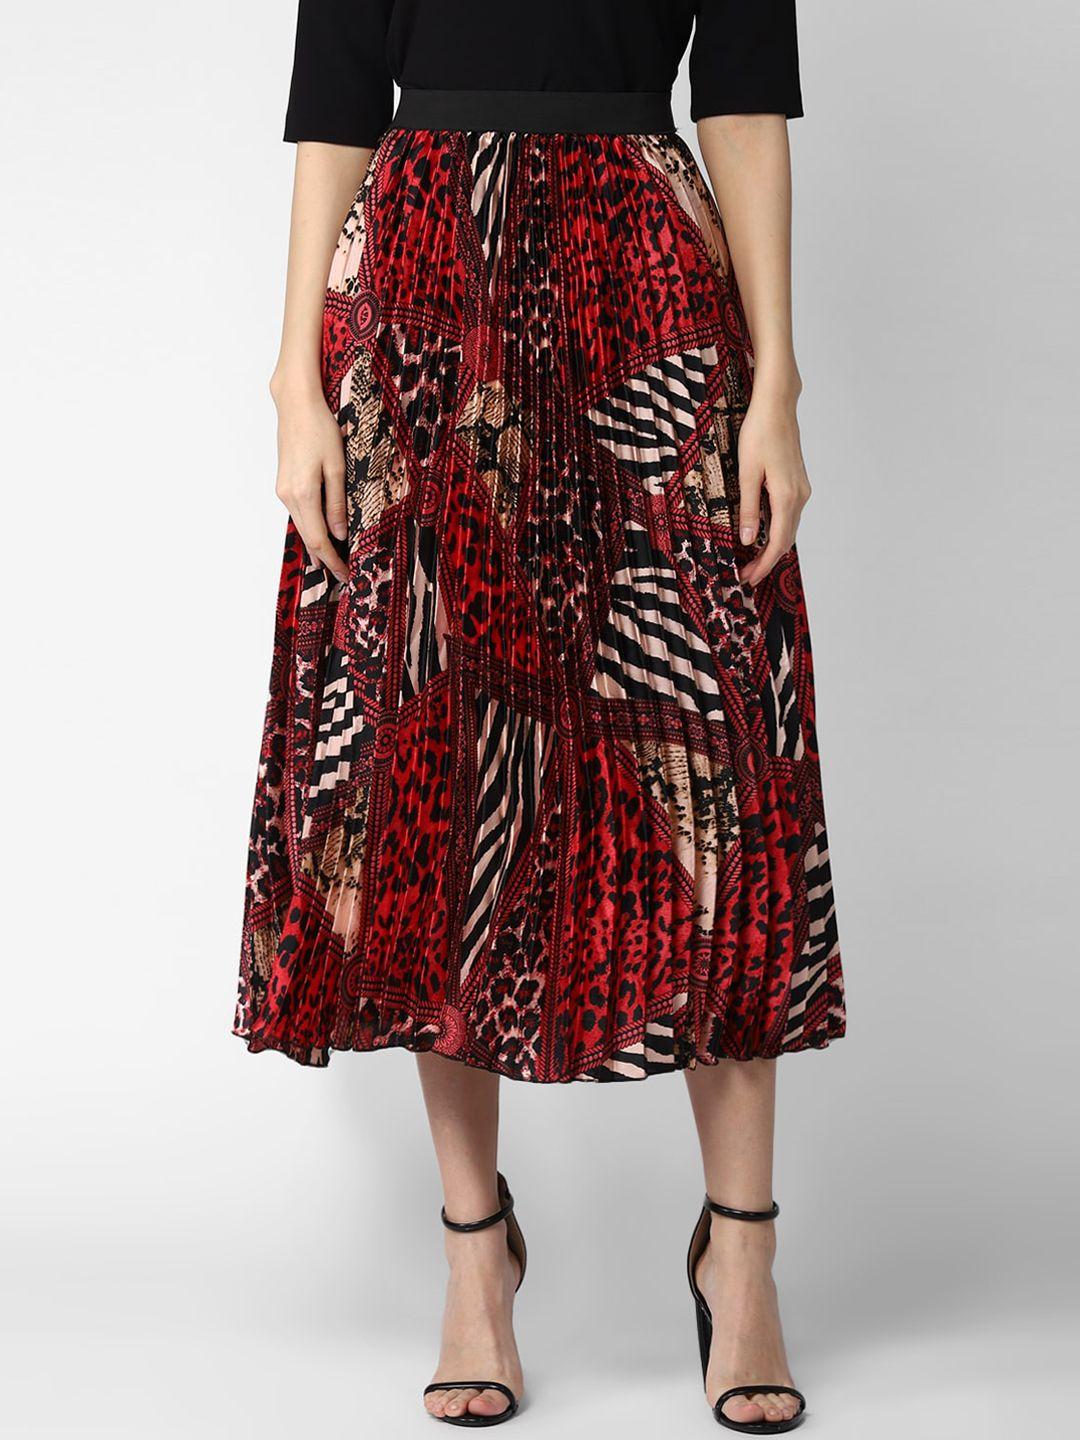 stylestone women red & black printed accordion pleated midi skirt